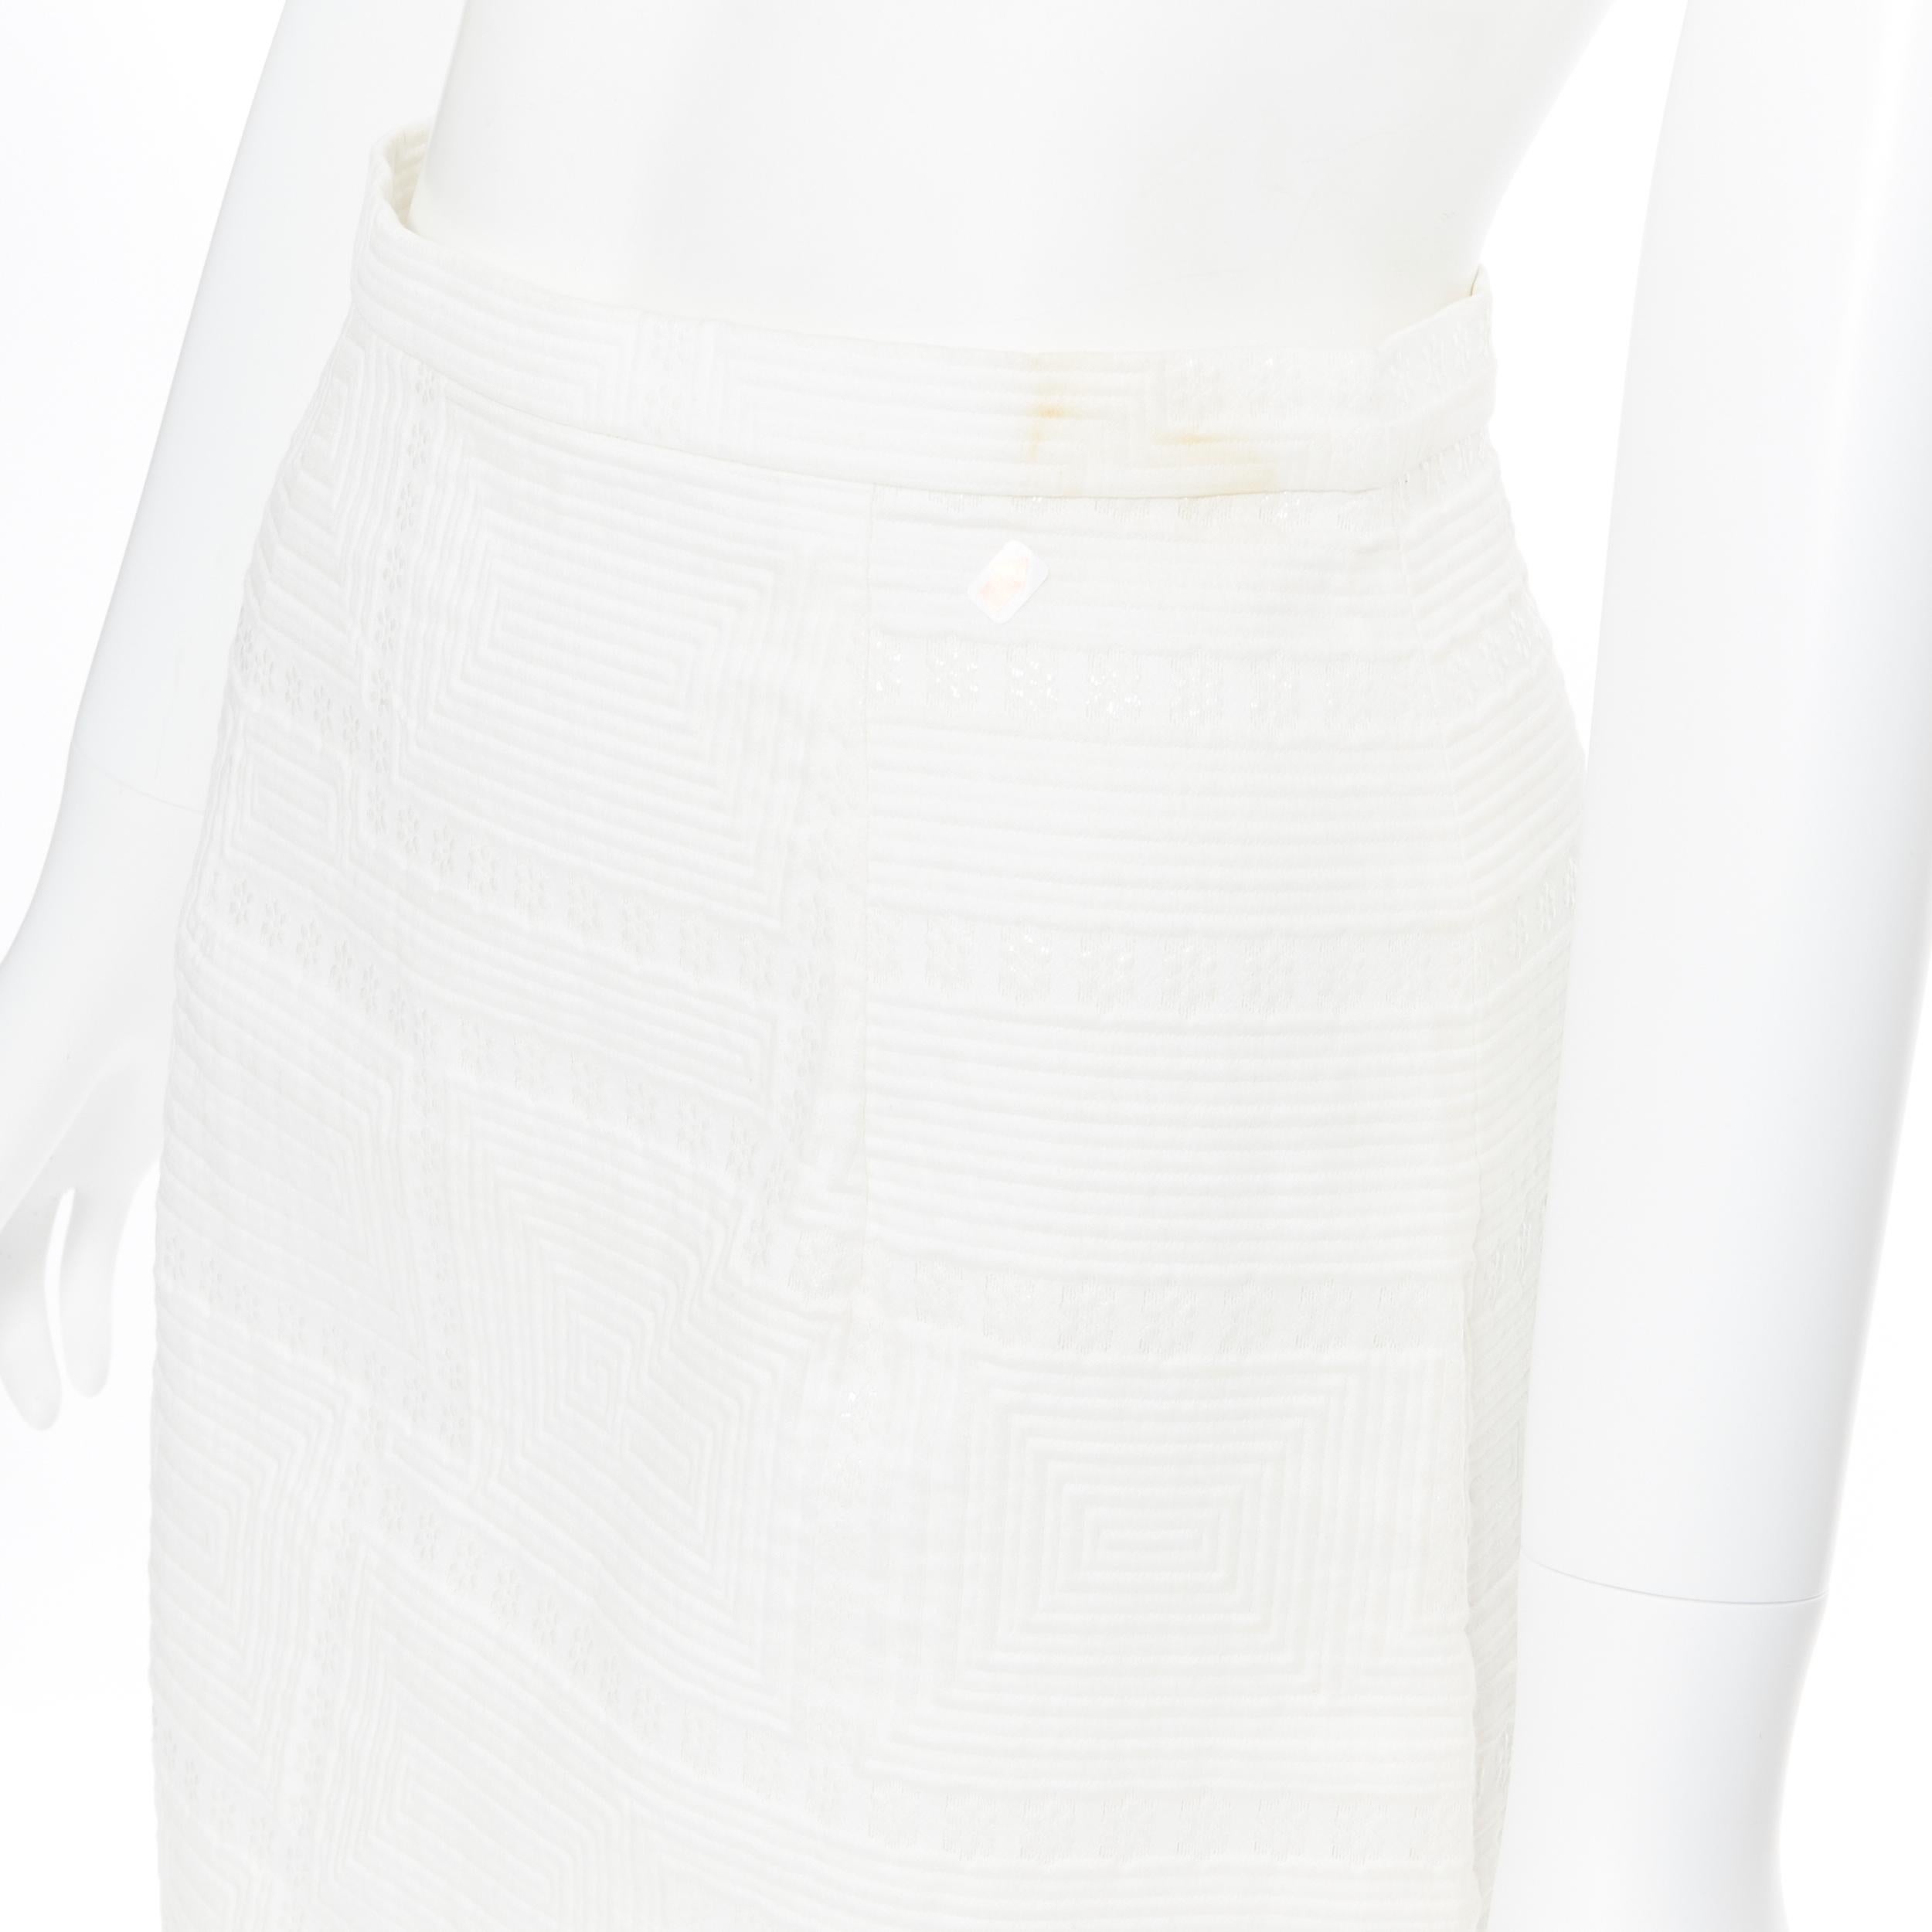 GIAMBATTISTA VALLI P15 white cotton geometric jaquard short skirt XXS 26